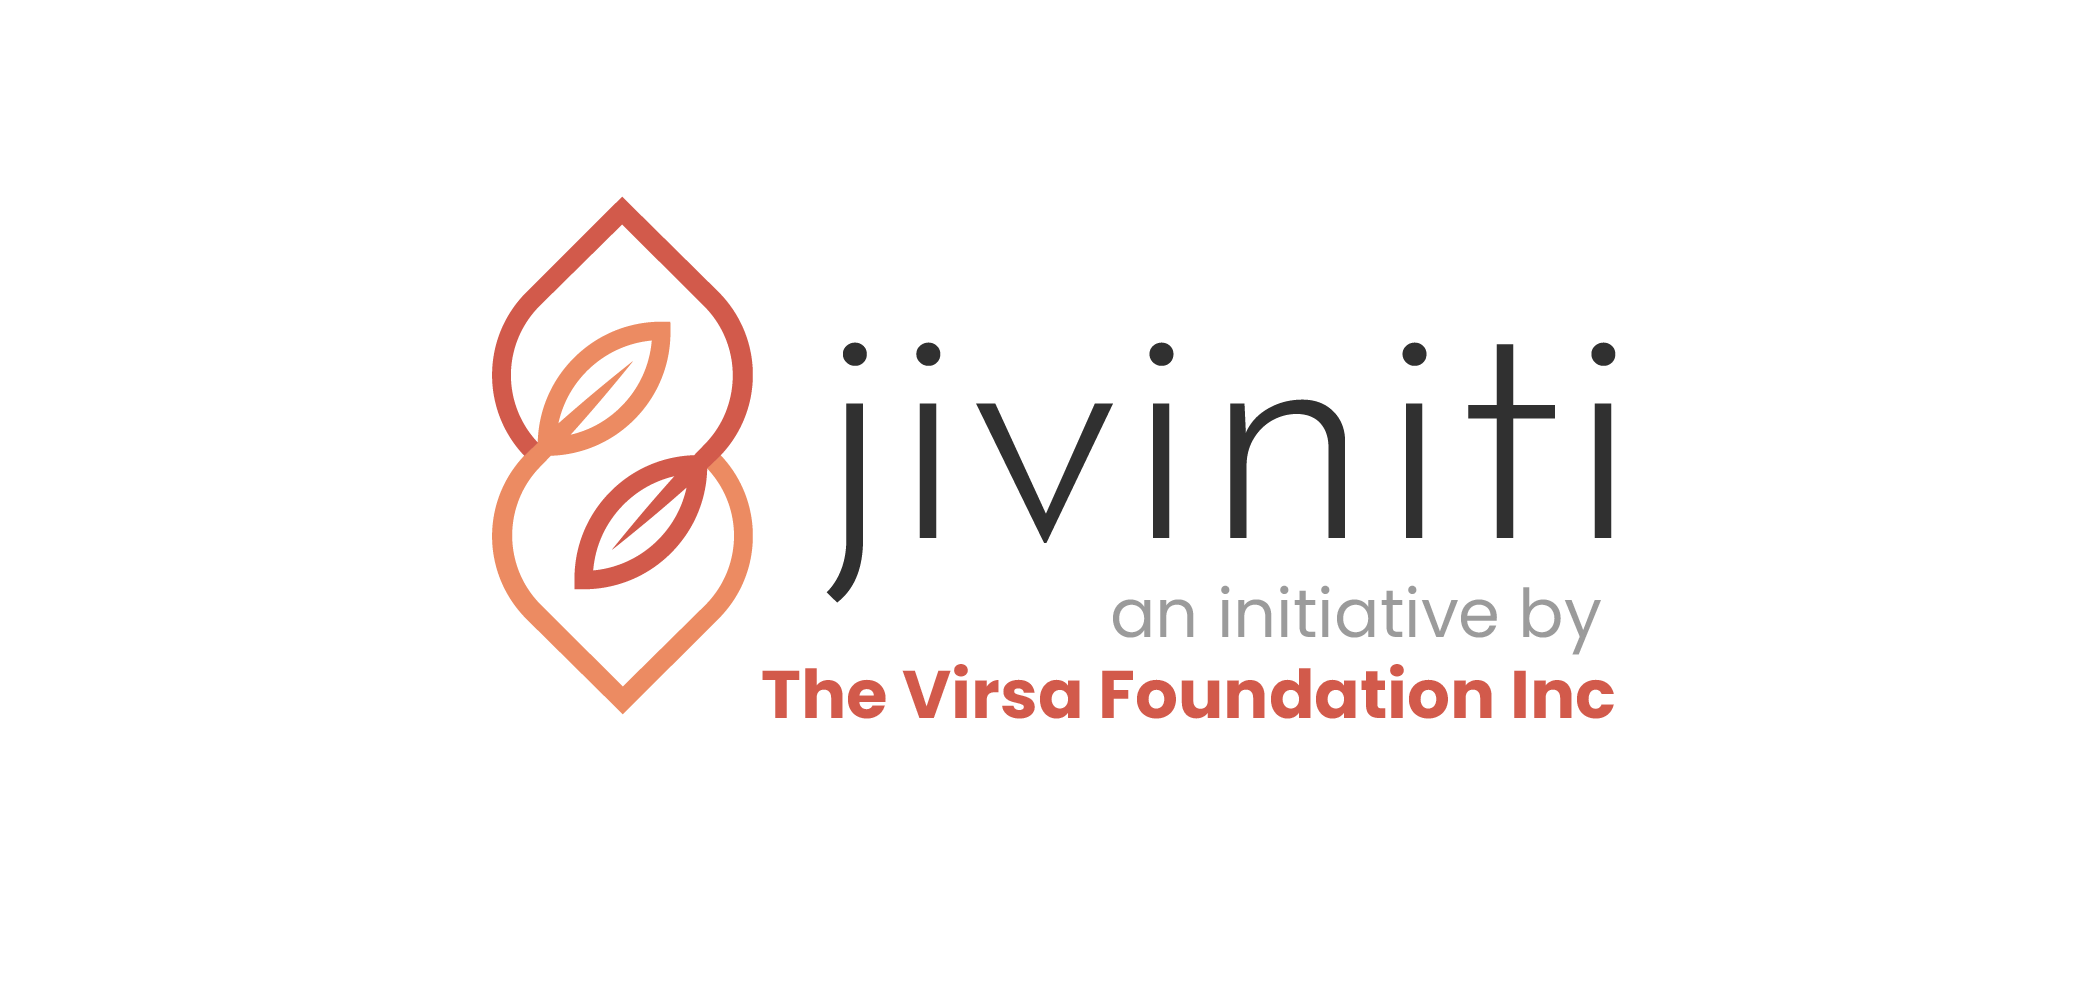 The Virsa Foundation Inc logo